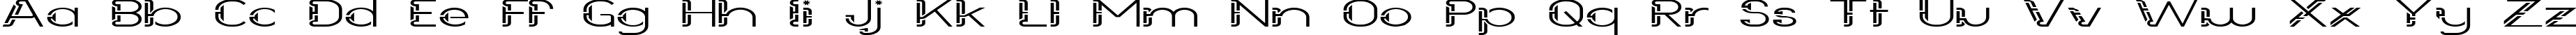 Пример написания английского алфавита шрифтом Future Sallow Wide